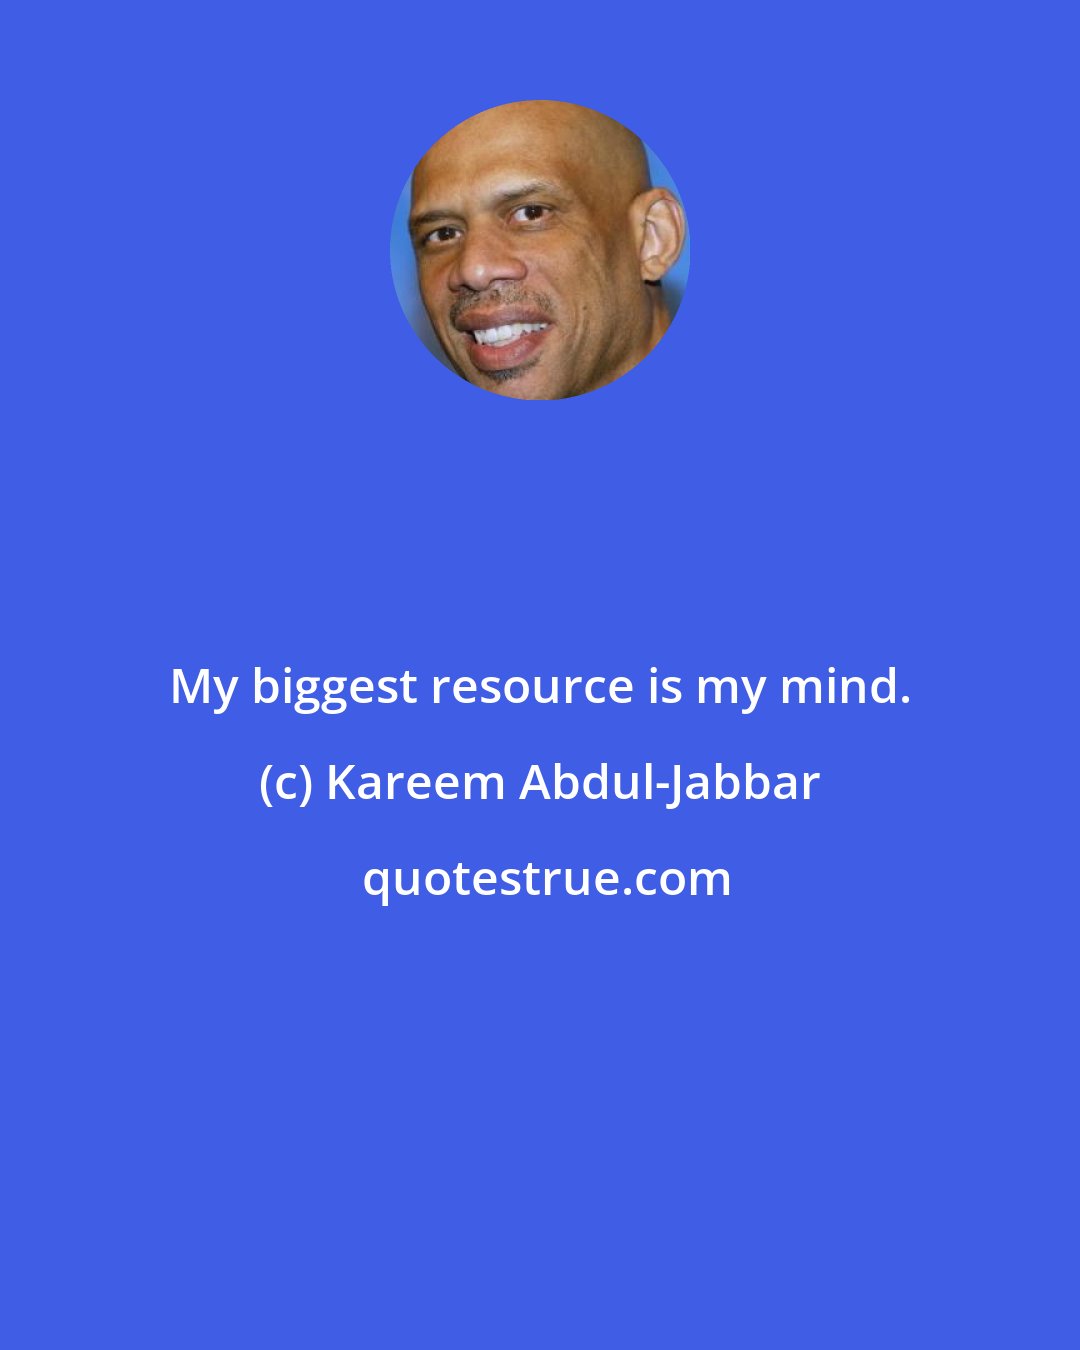 Kareem Abdul-Jabbar: My biggest resource is my mind.